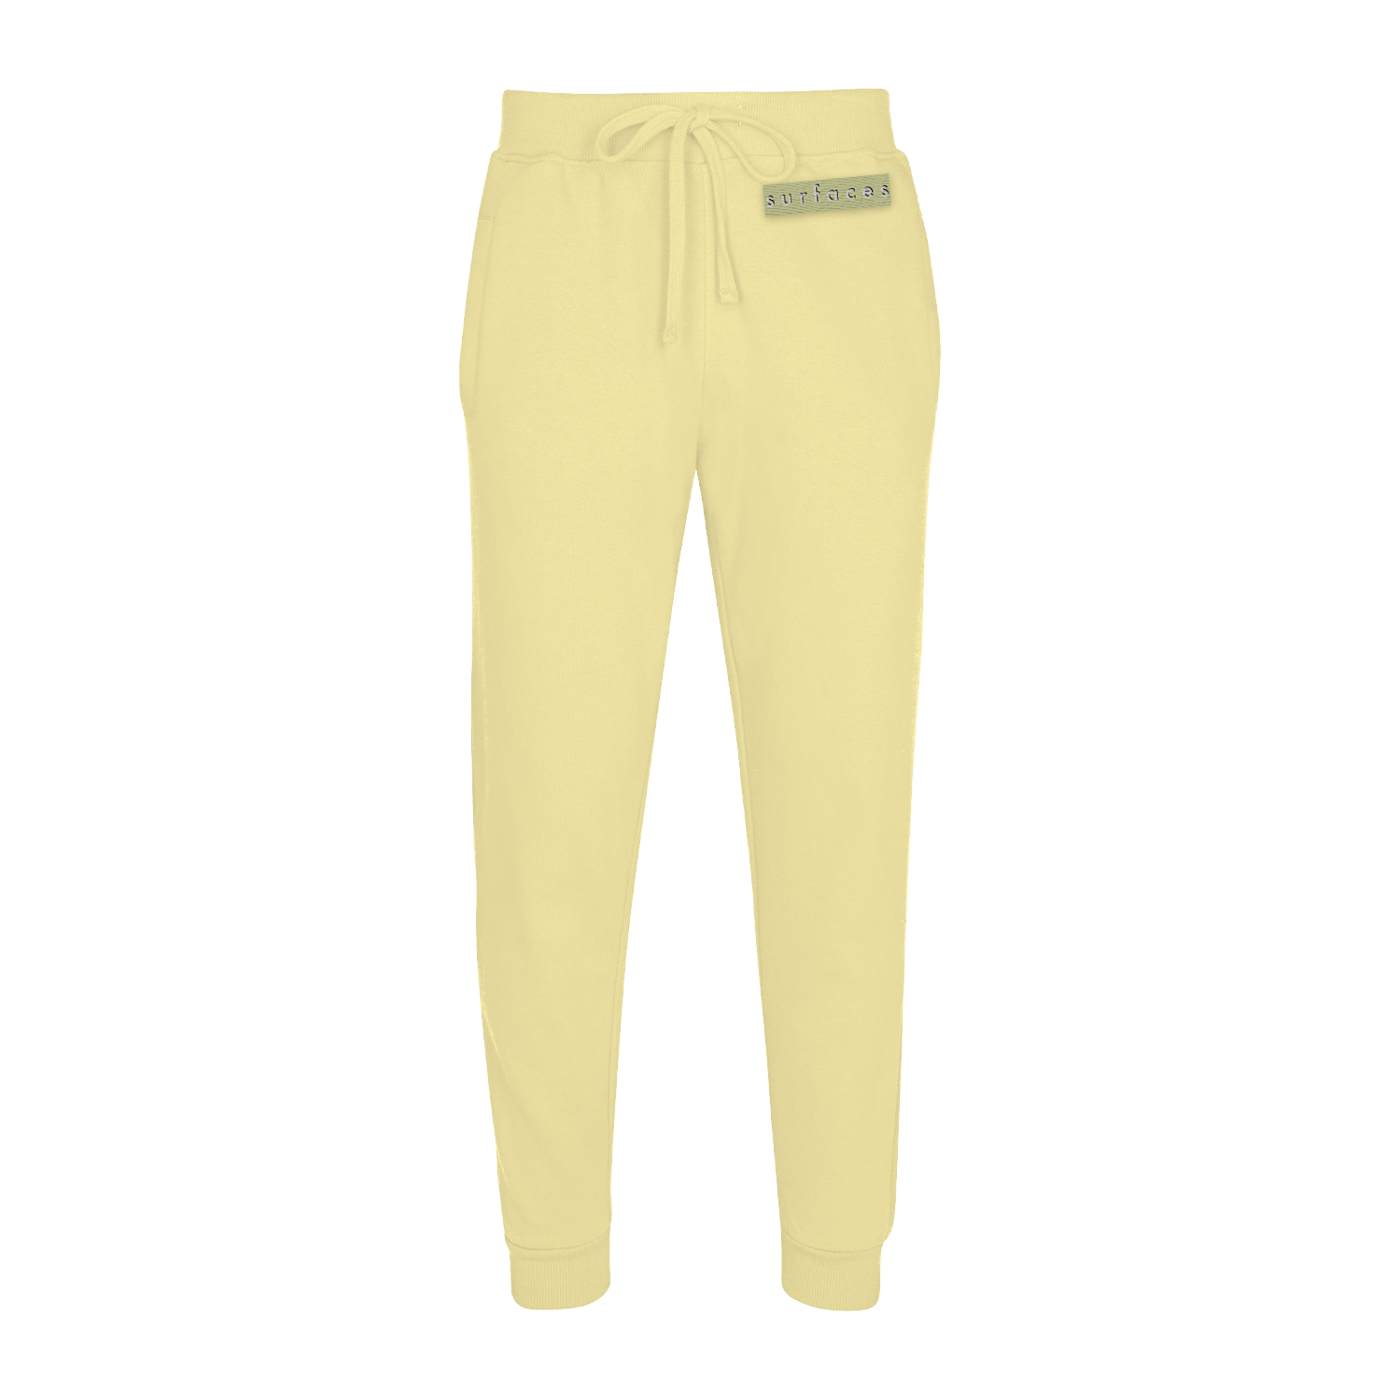 Surfaces Monochrome Sweatpants - Yellow